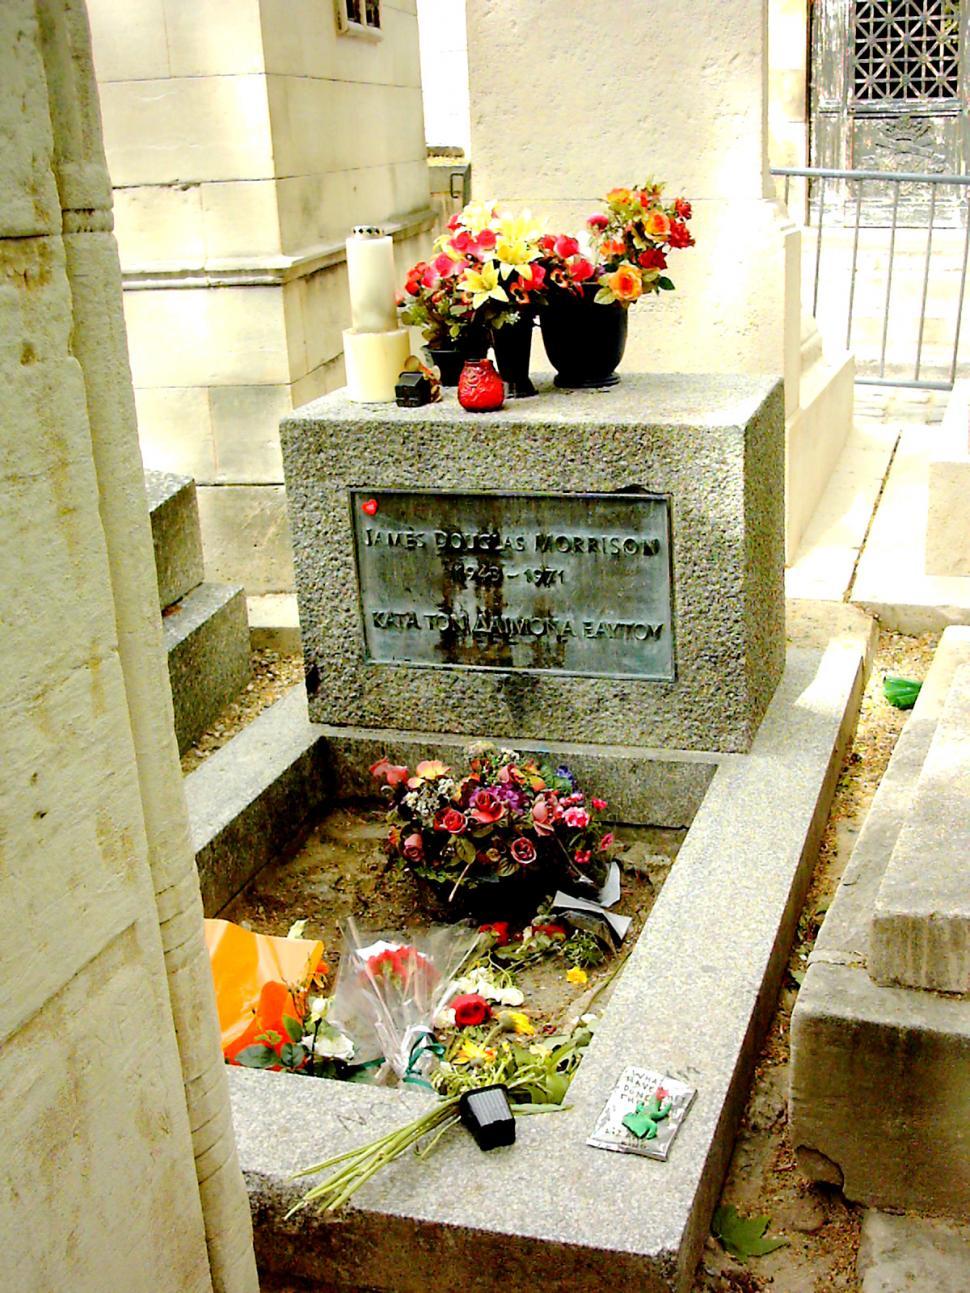 Free Image of Jim Morrisons Grave 